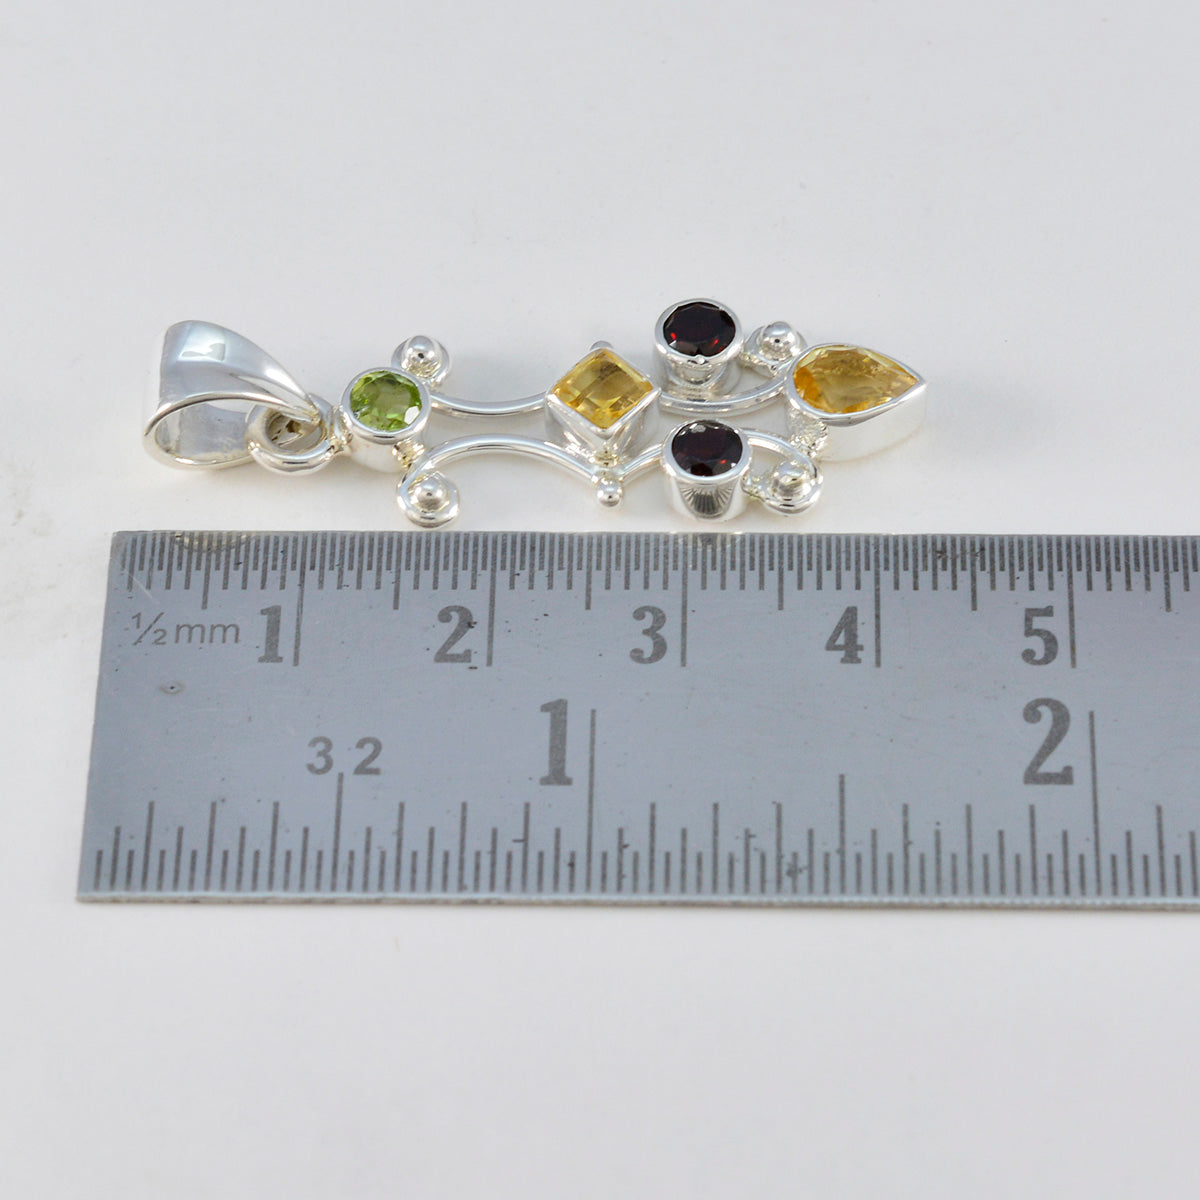 Riyo Drop Gemstone Multi Faceted Multi Color Multi Stone Sterling Silver Pendant Gift For Handmade